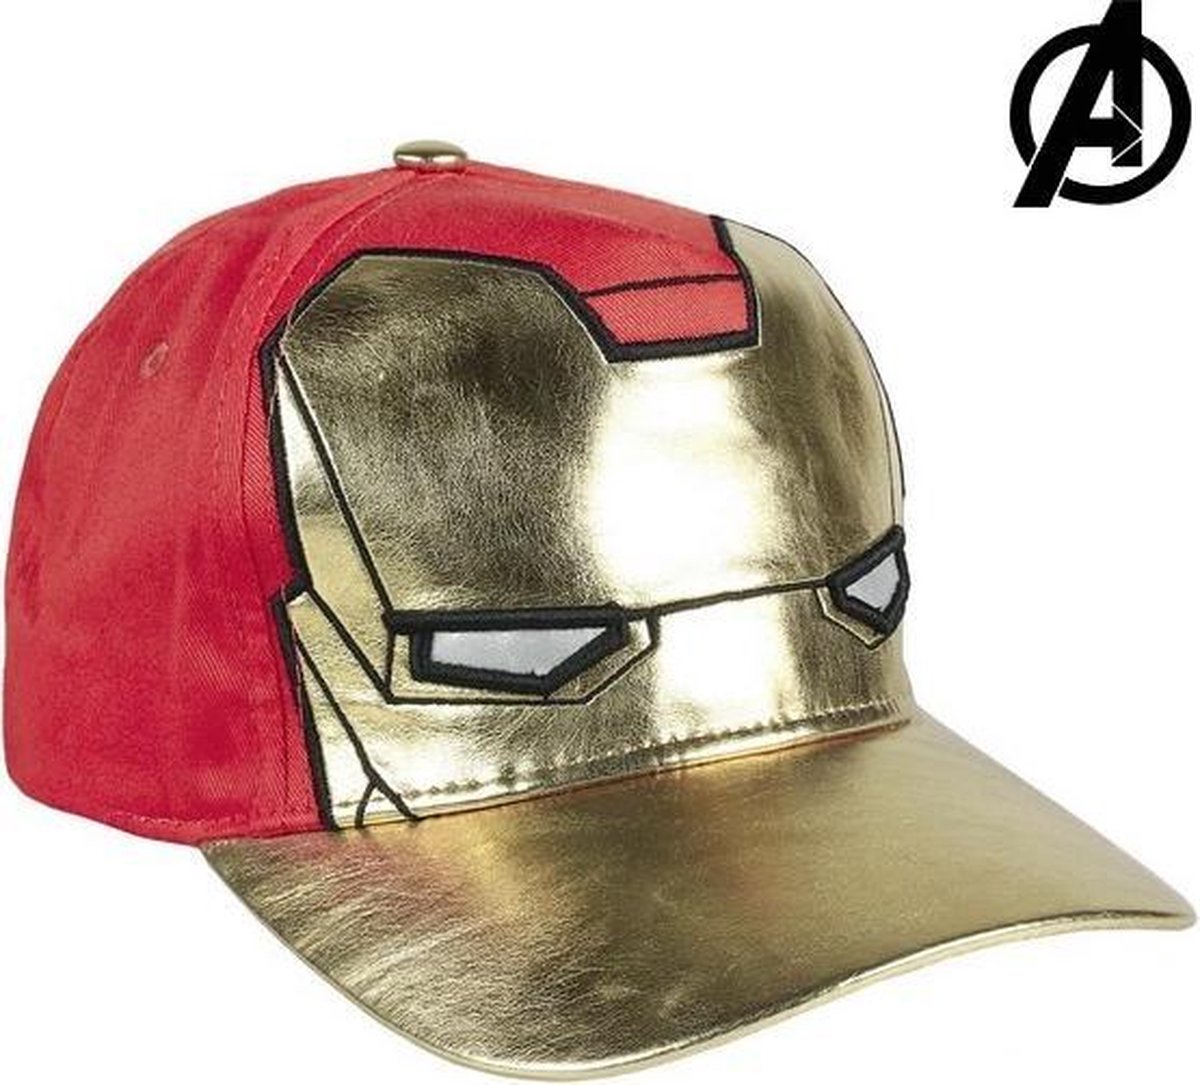 Kinderpet Iron Man The Avengers kindercap, kinder baseball cap